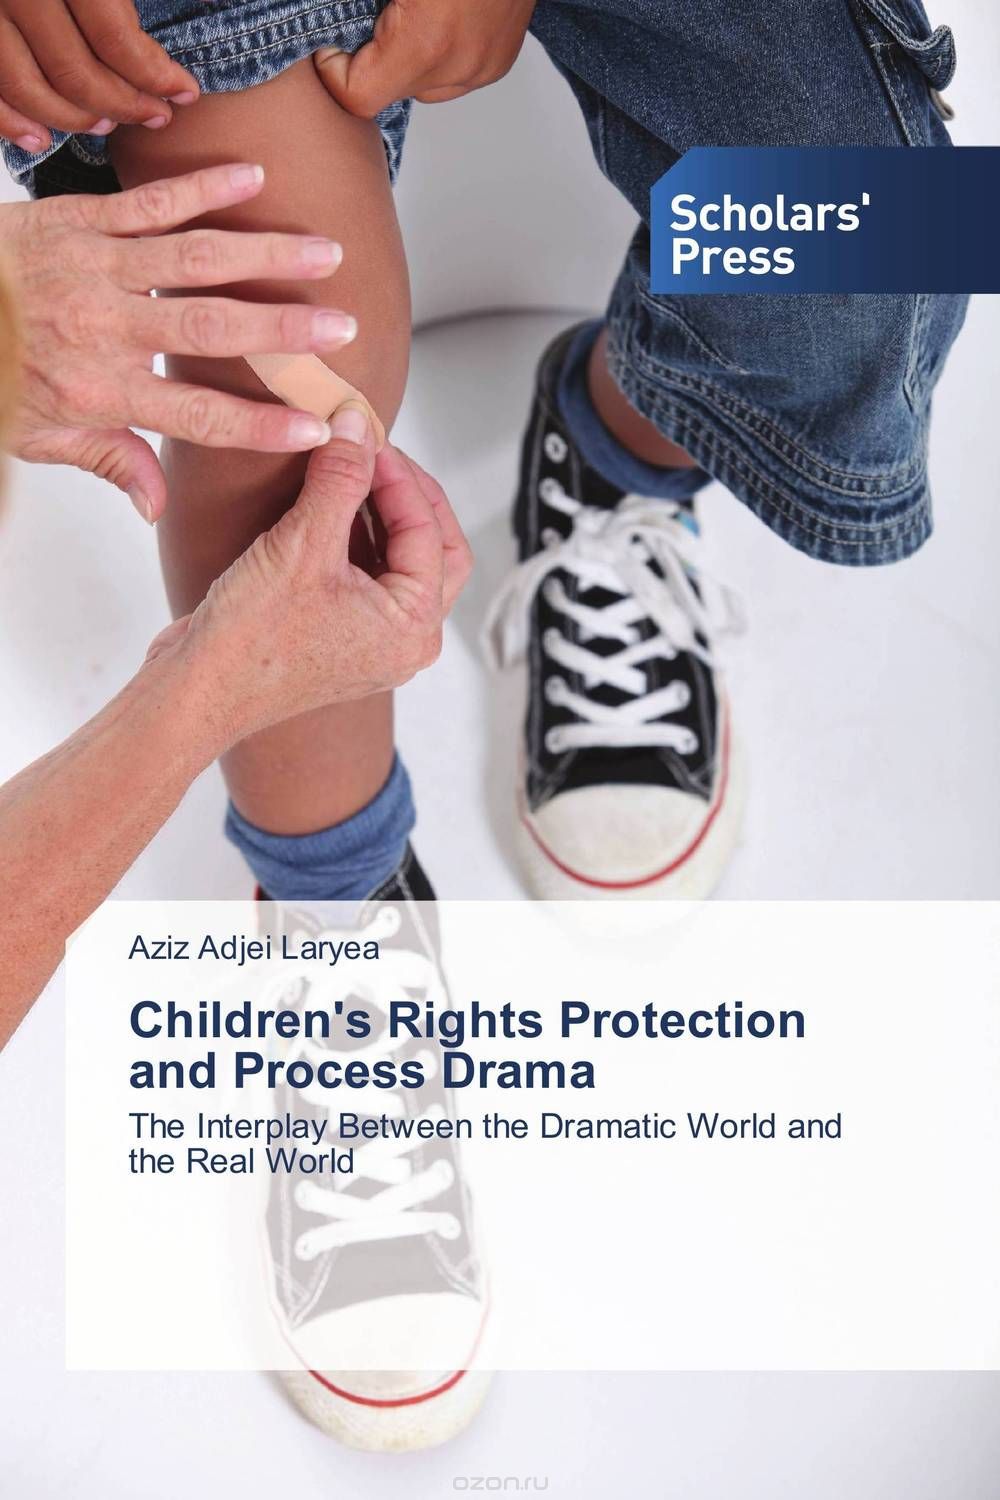 Скачать книгу "Children's Rights Protection and Process Drama"